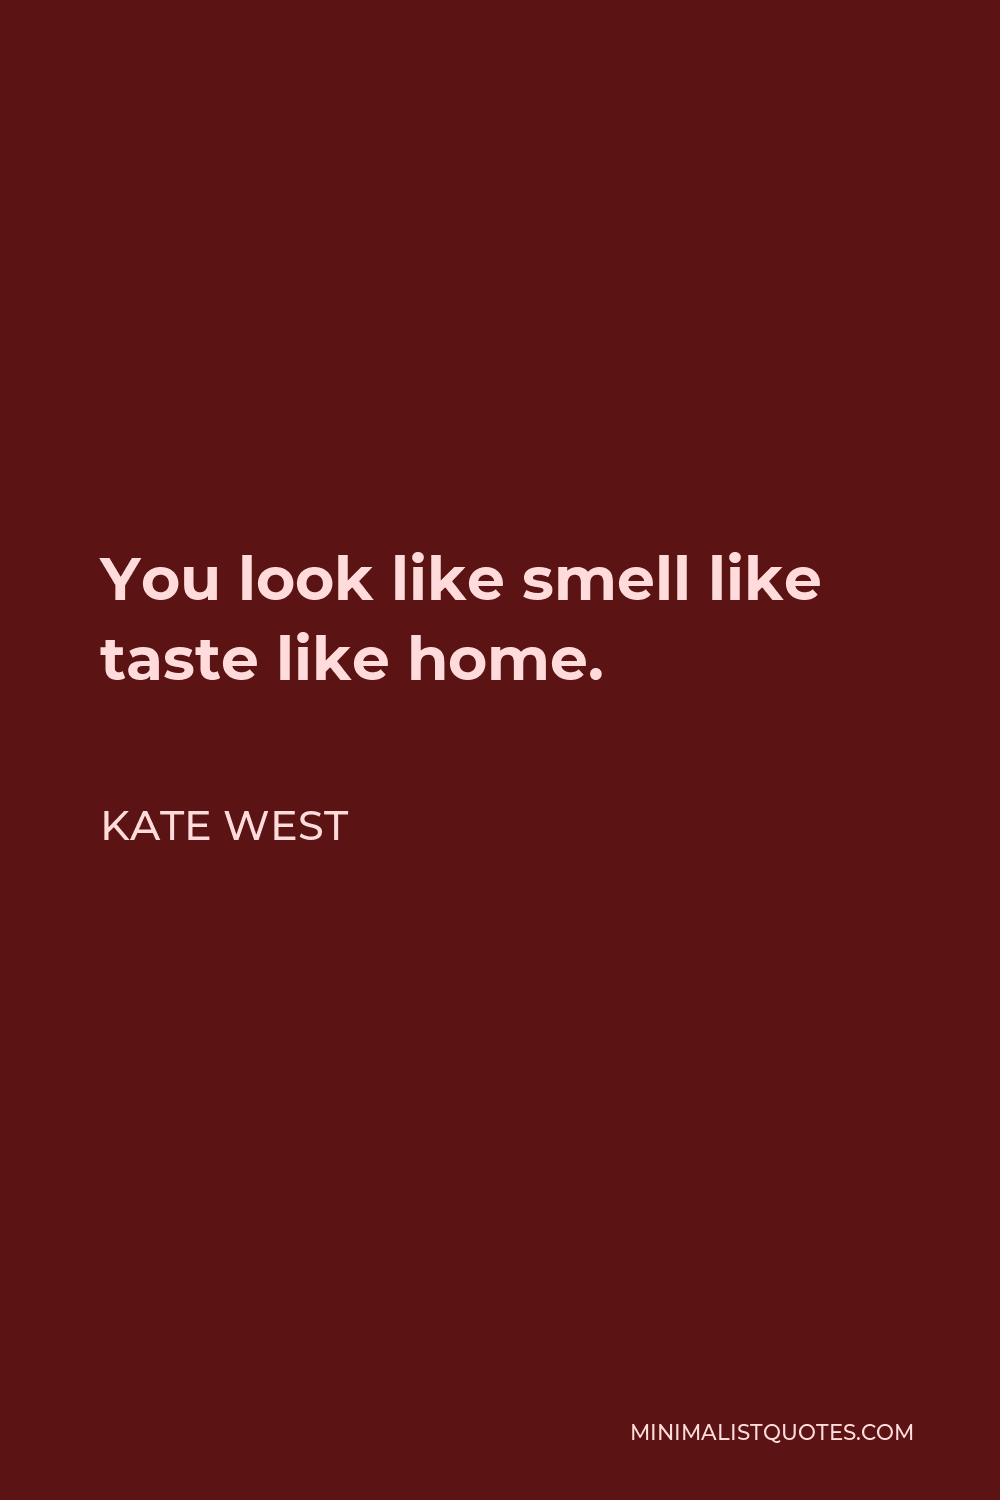 Kate West Quote - You look like smell like taste like home.